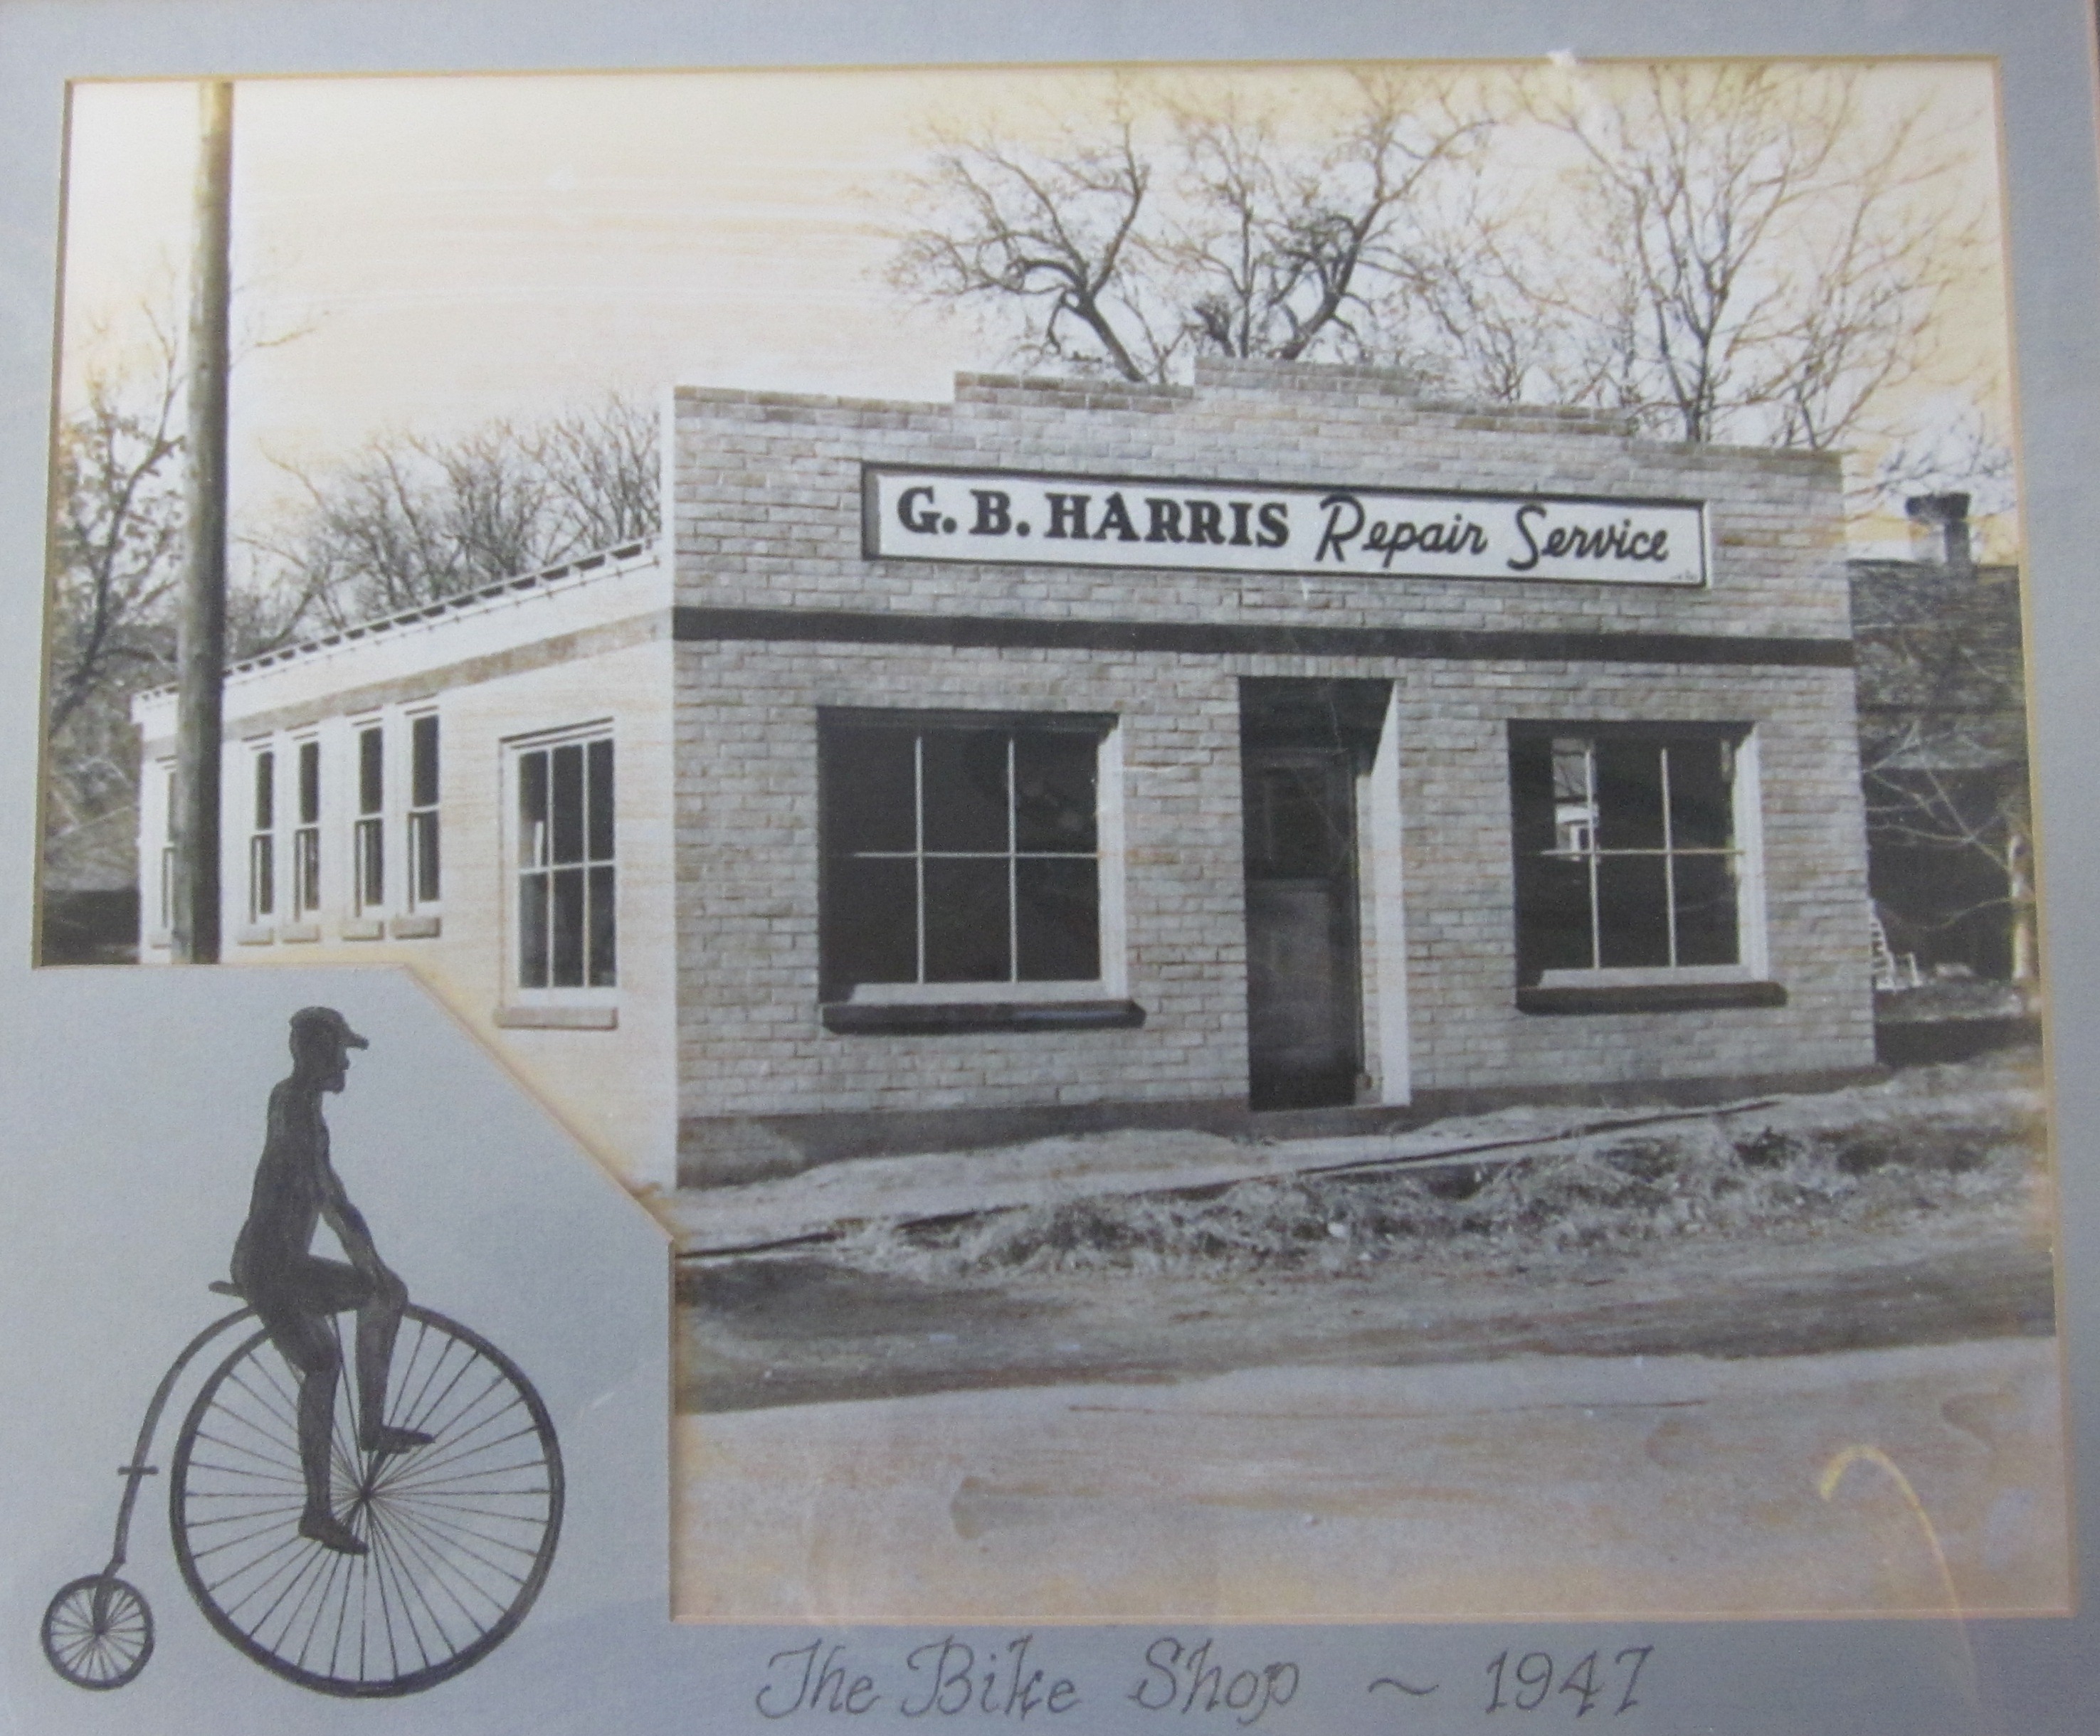 G. B. Harris Repair Service building